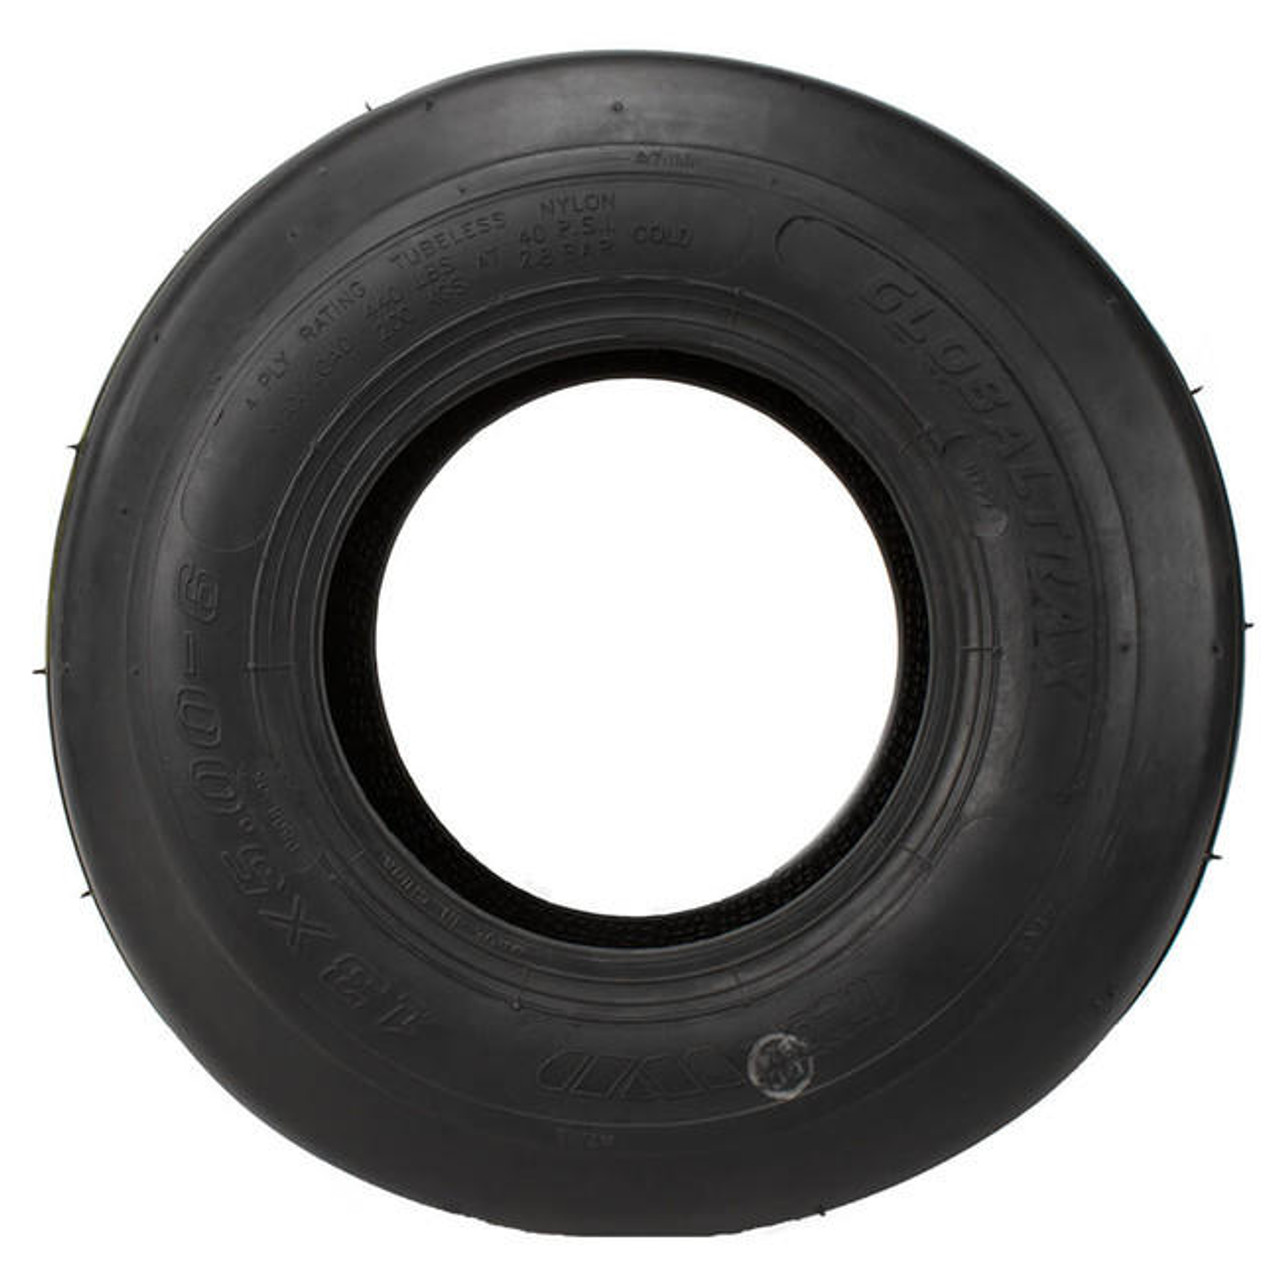 4.10/3.50-4 Turf Tire - GlobalTrax P332 2 Ply